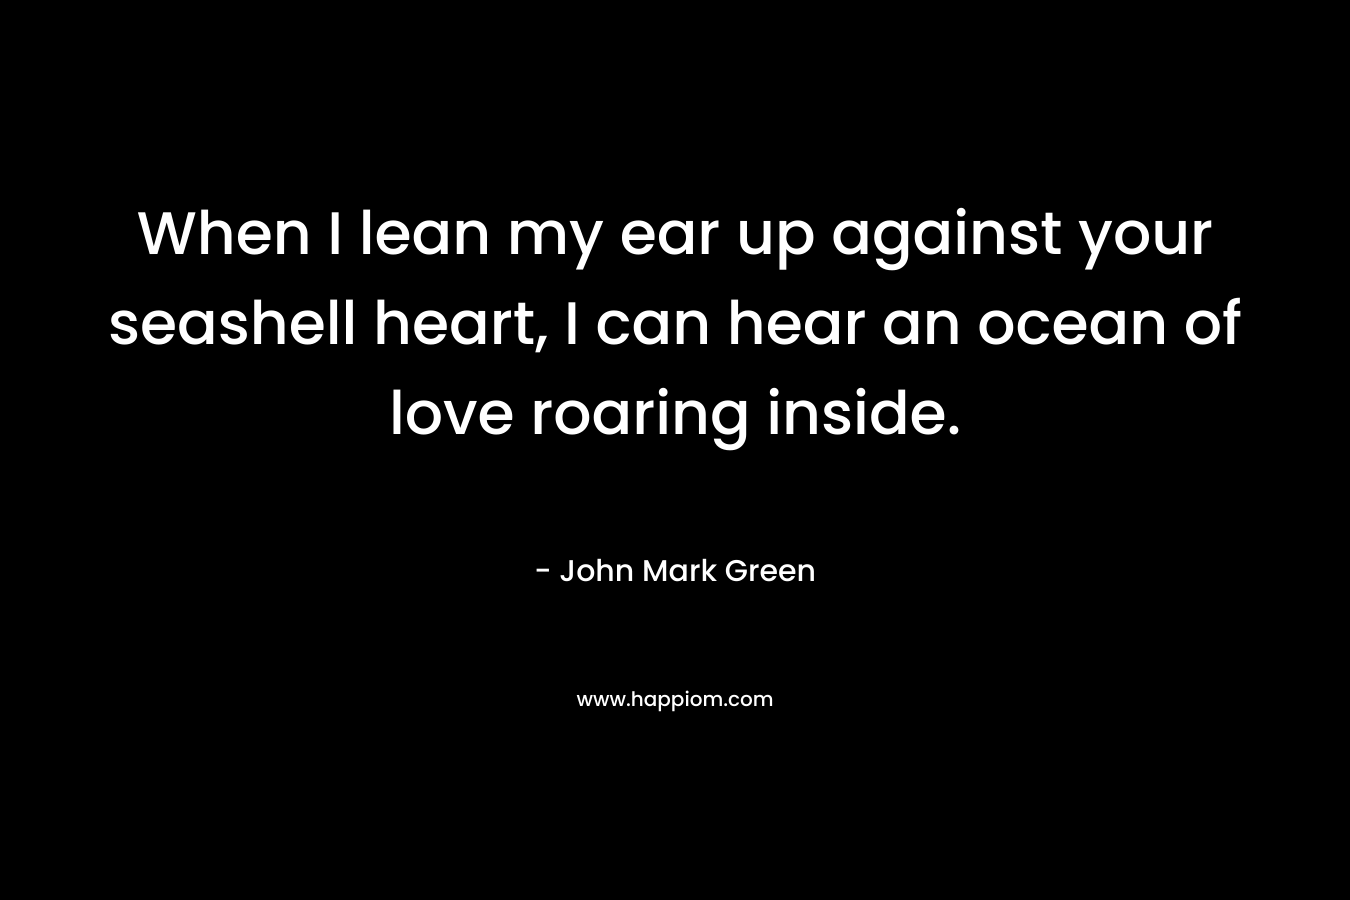 When I lean my ear up against your seashell heart, I can hear an ocean of love roaring inside.